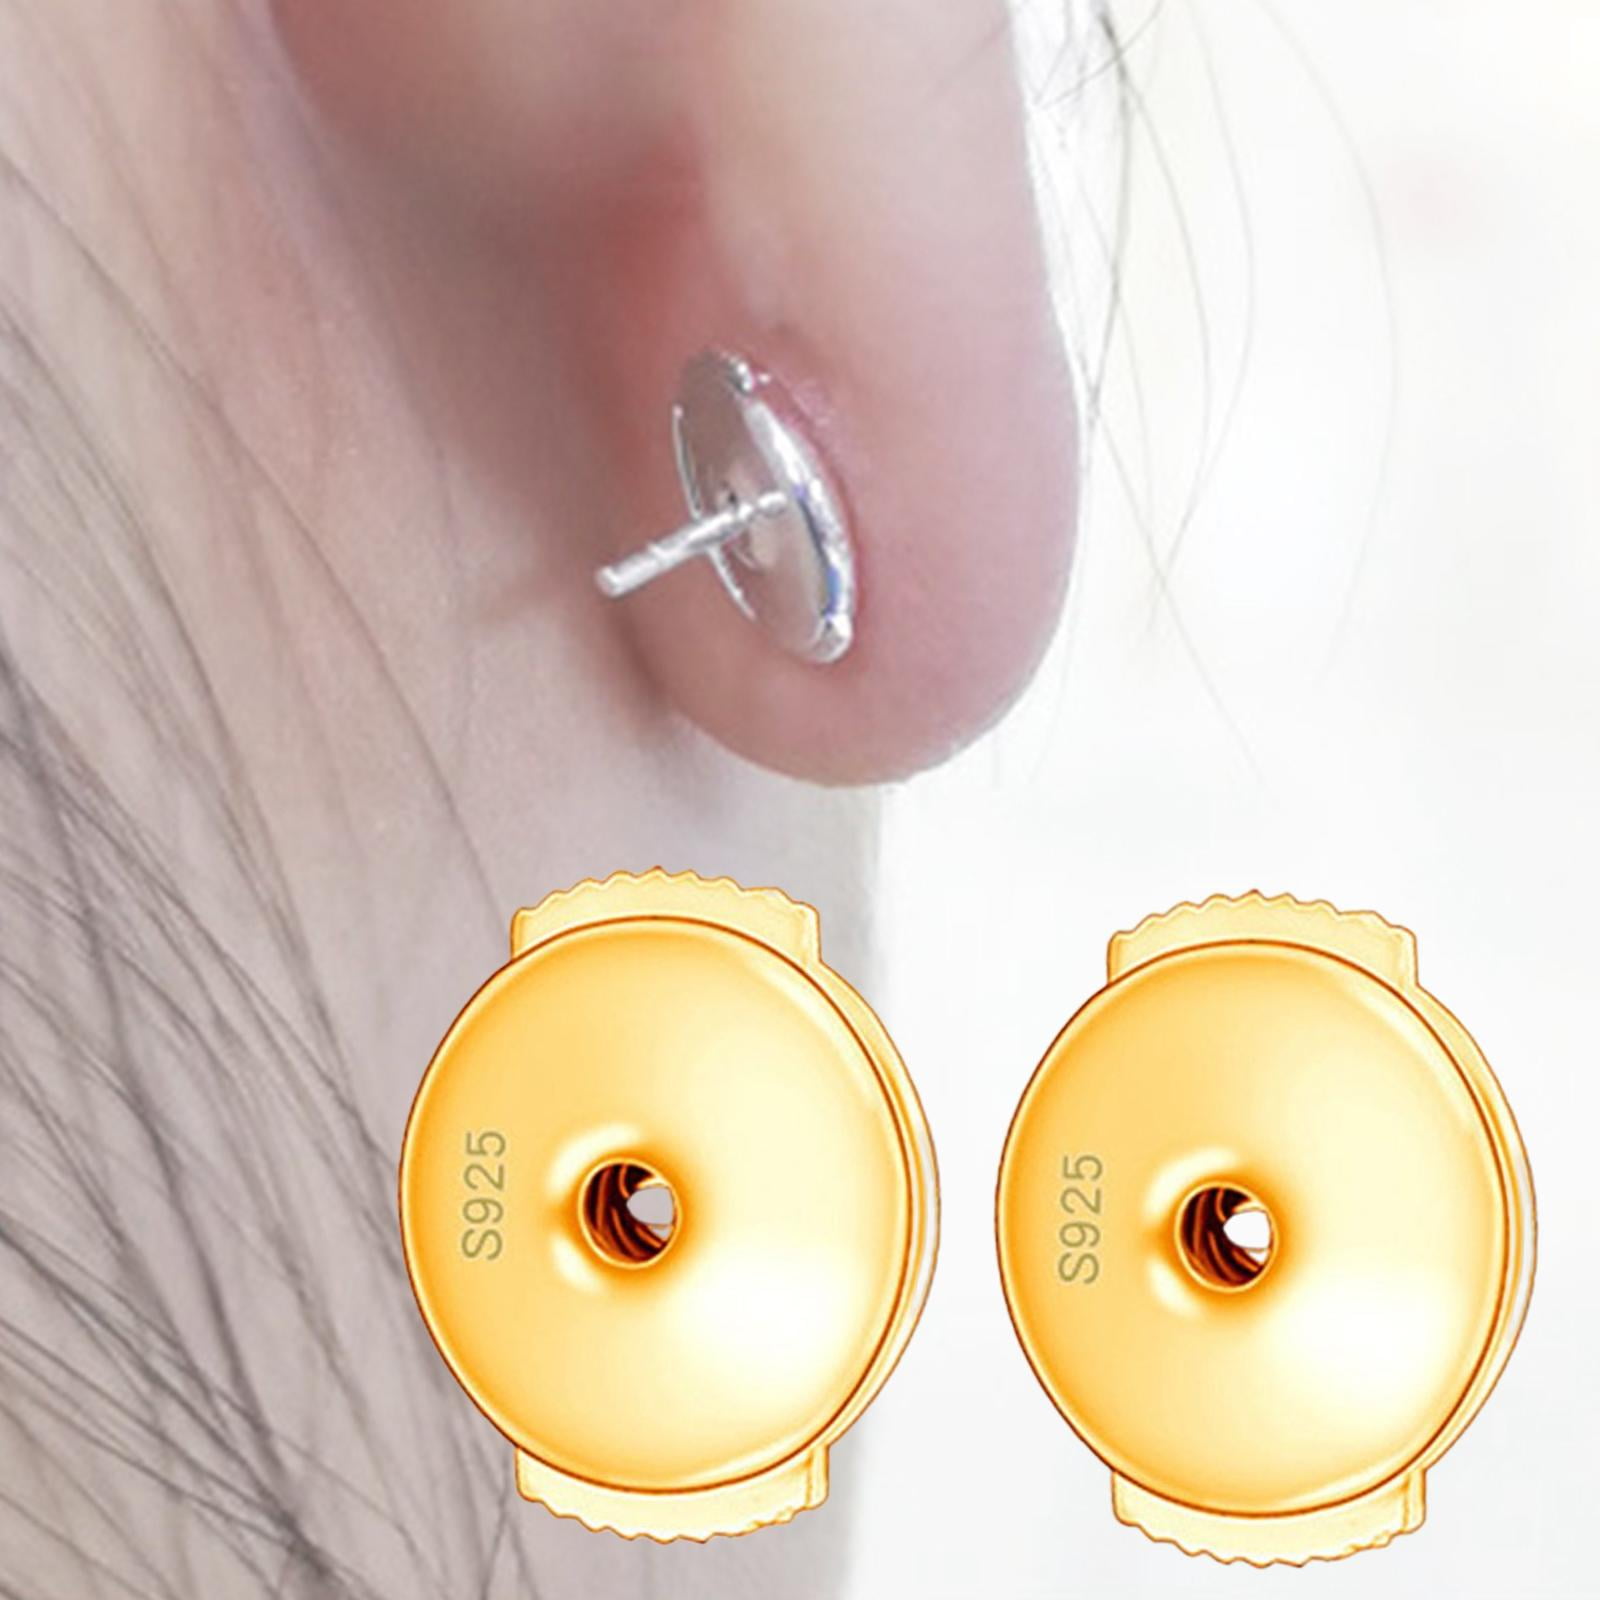 6x10 Mm Gold Tone Earring Backs, Earring Stoppers, Silicone Rubber Earring  Backs, Earrings Findings, Earring Nuts 